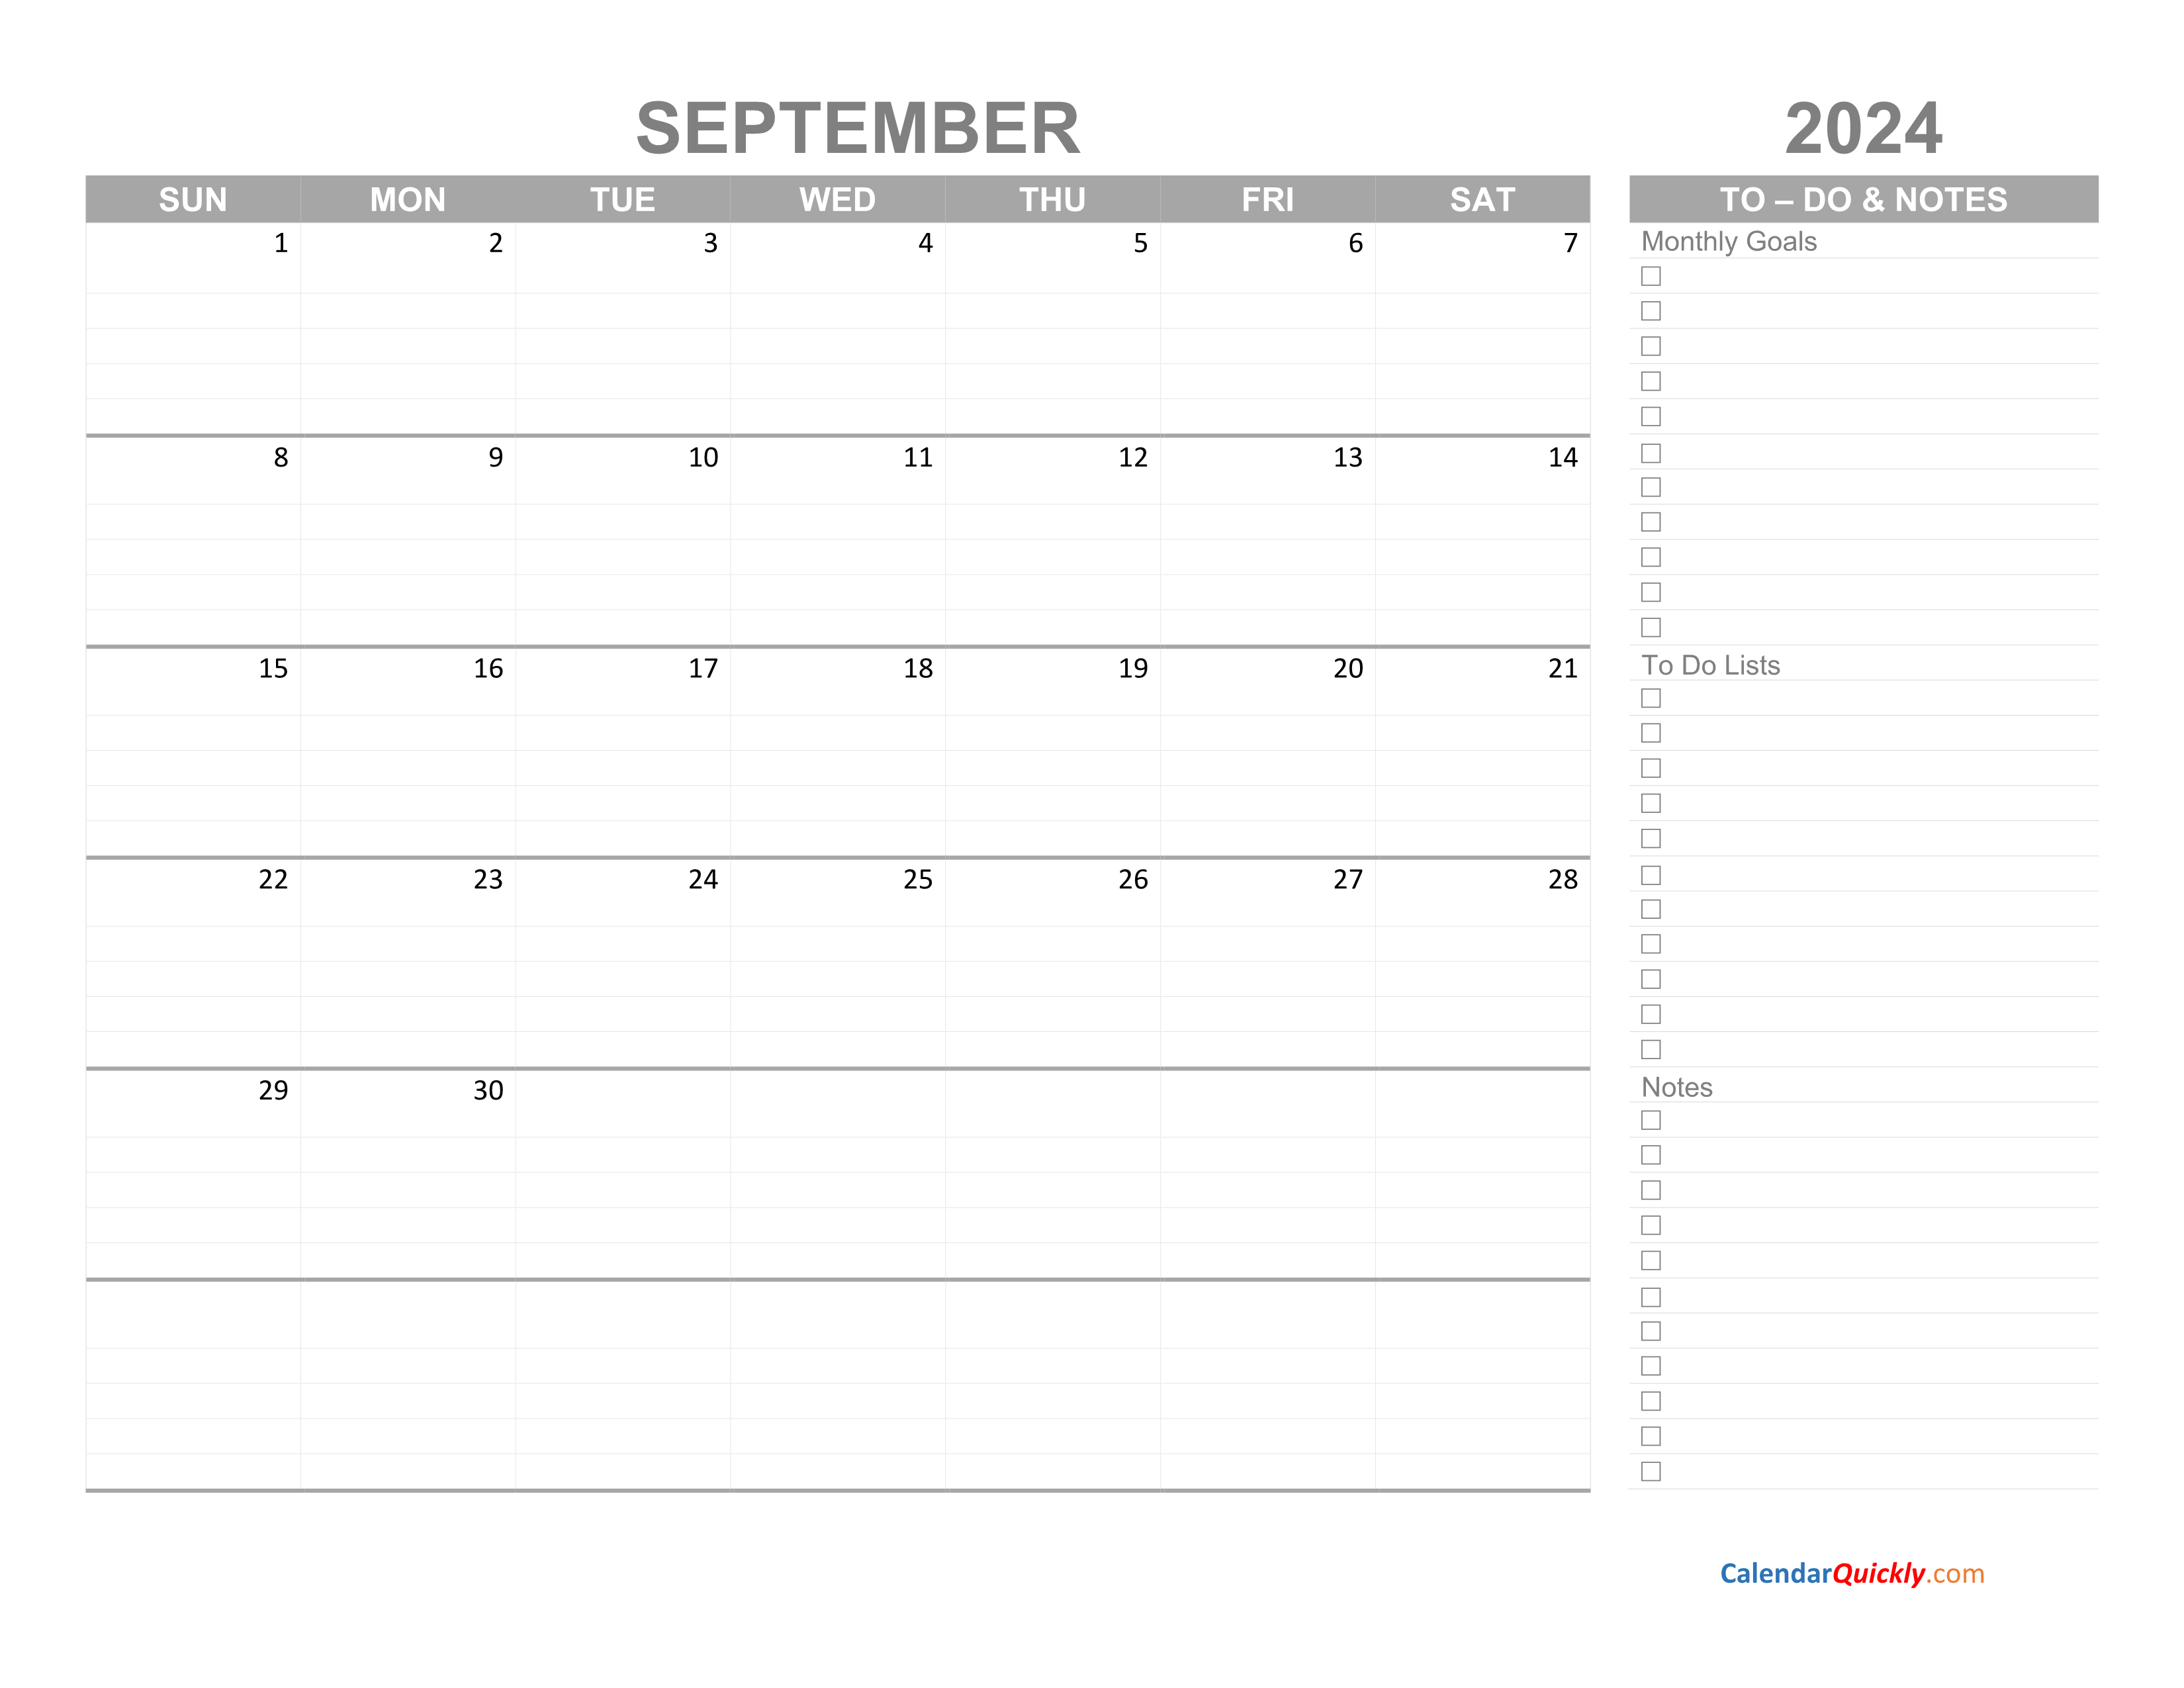 September 2024 Calendar with ToDo List Calendar Quickly